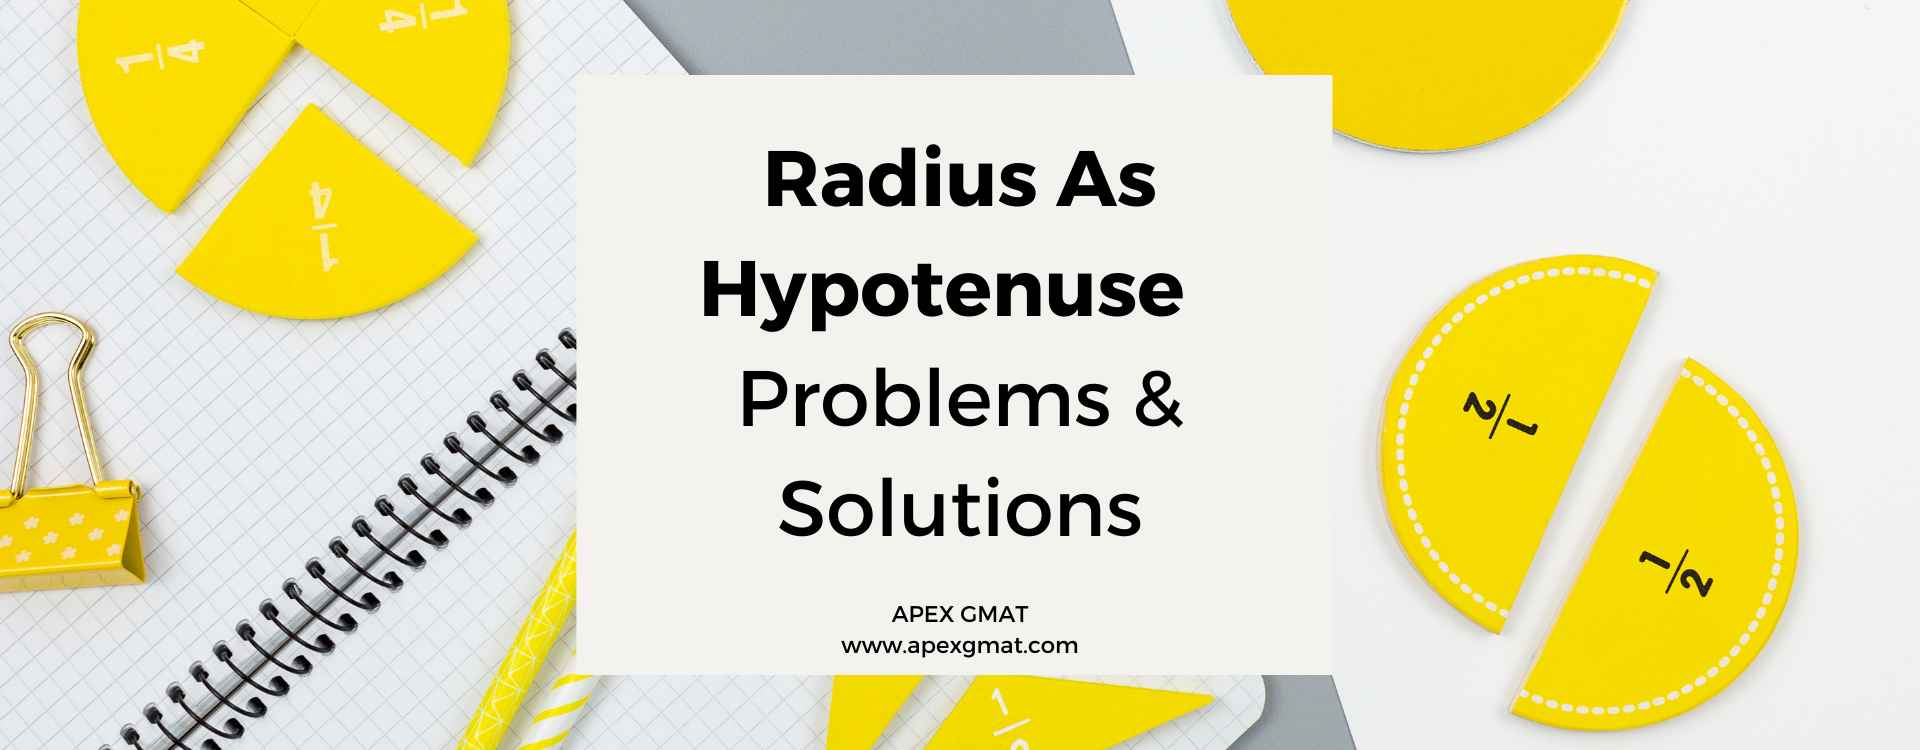 Radius As Hypotenuse – Problems & Solutions